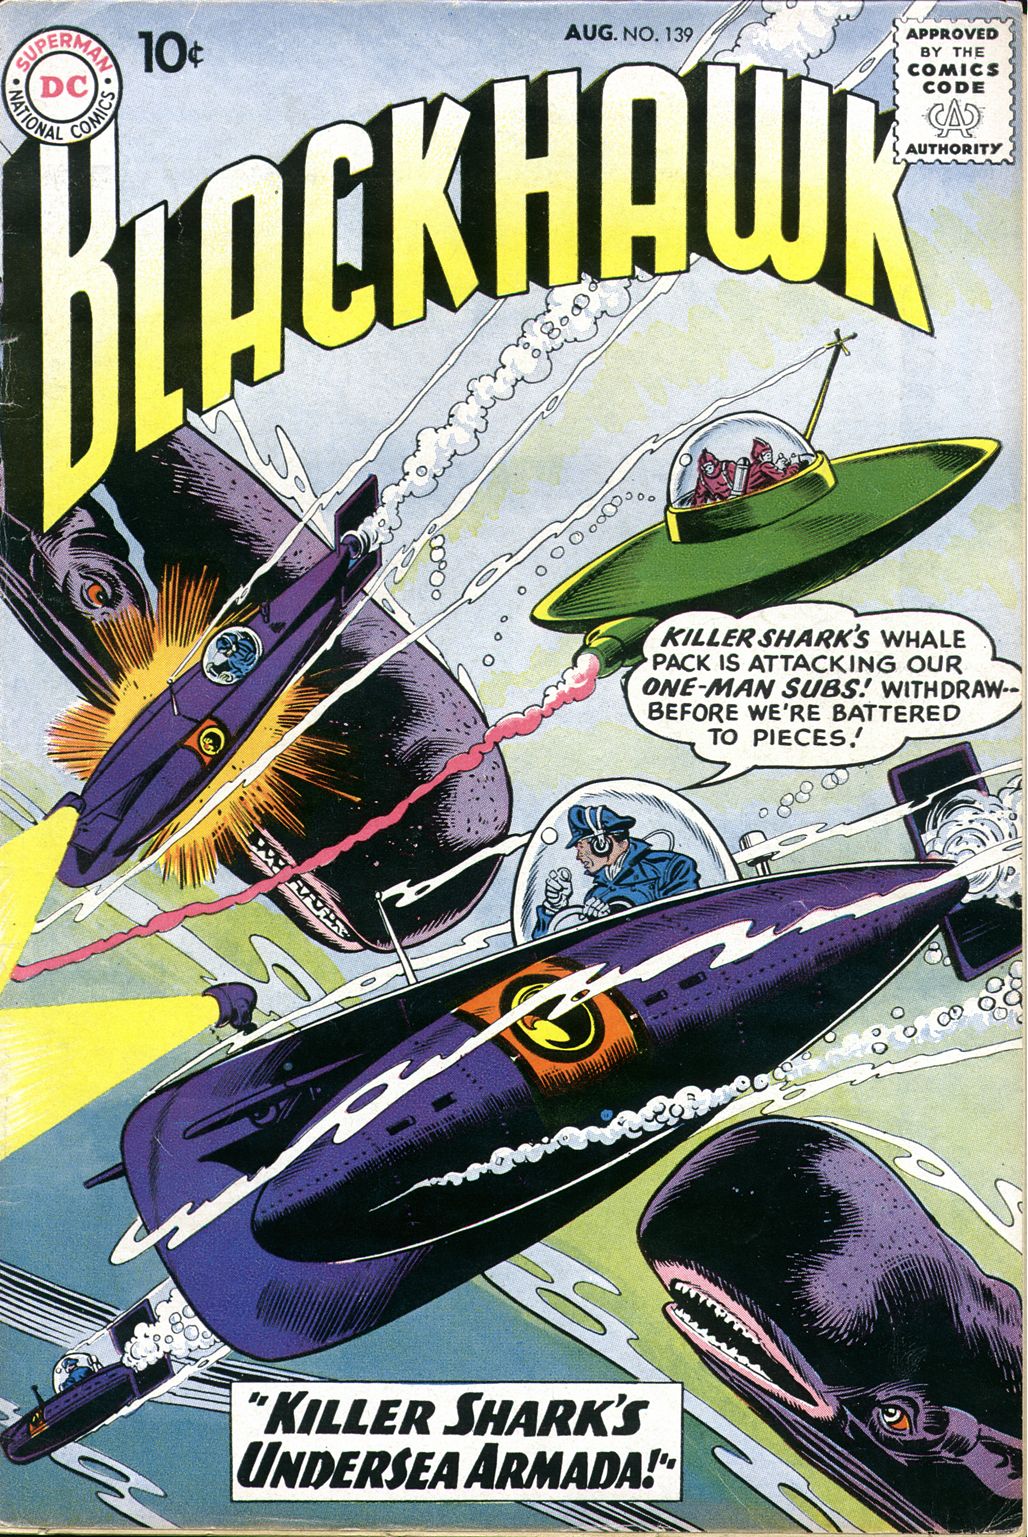 Blackhawk (1957) Issue #139 #32 - English 1